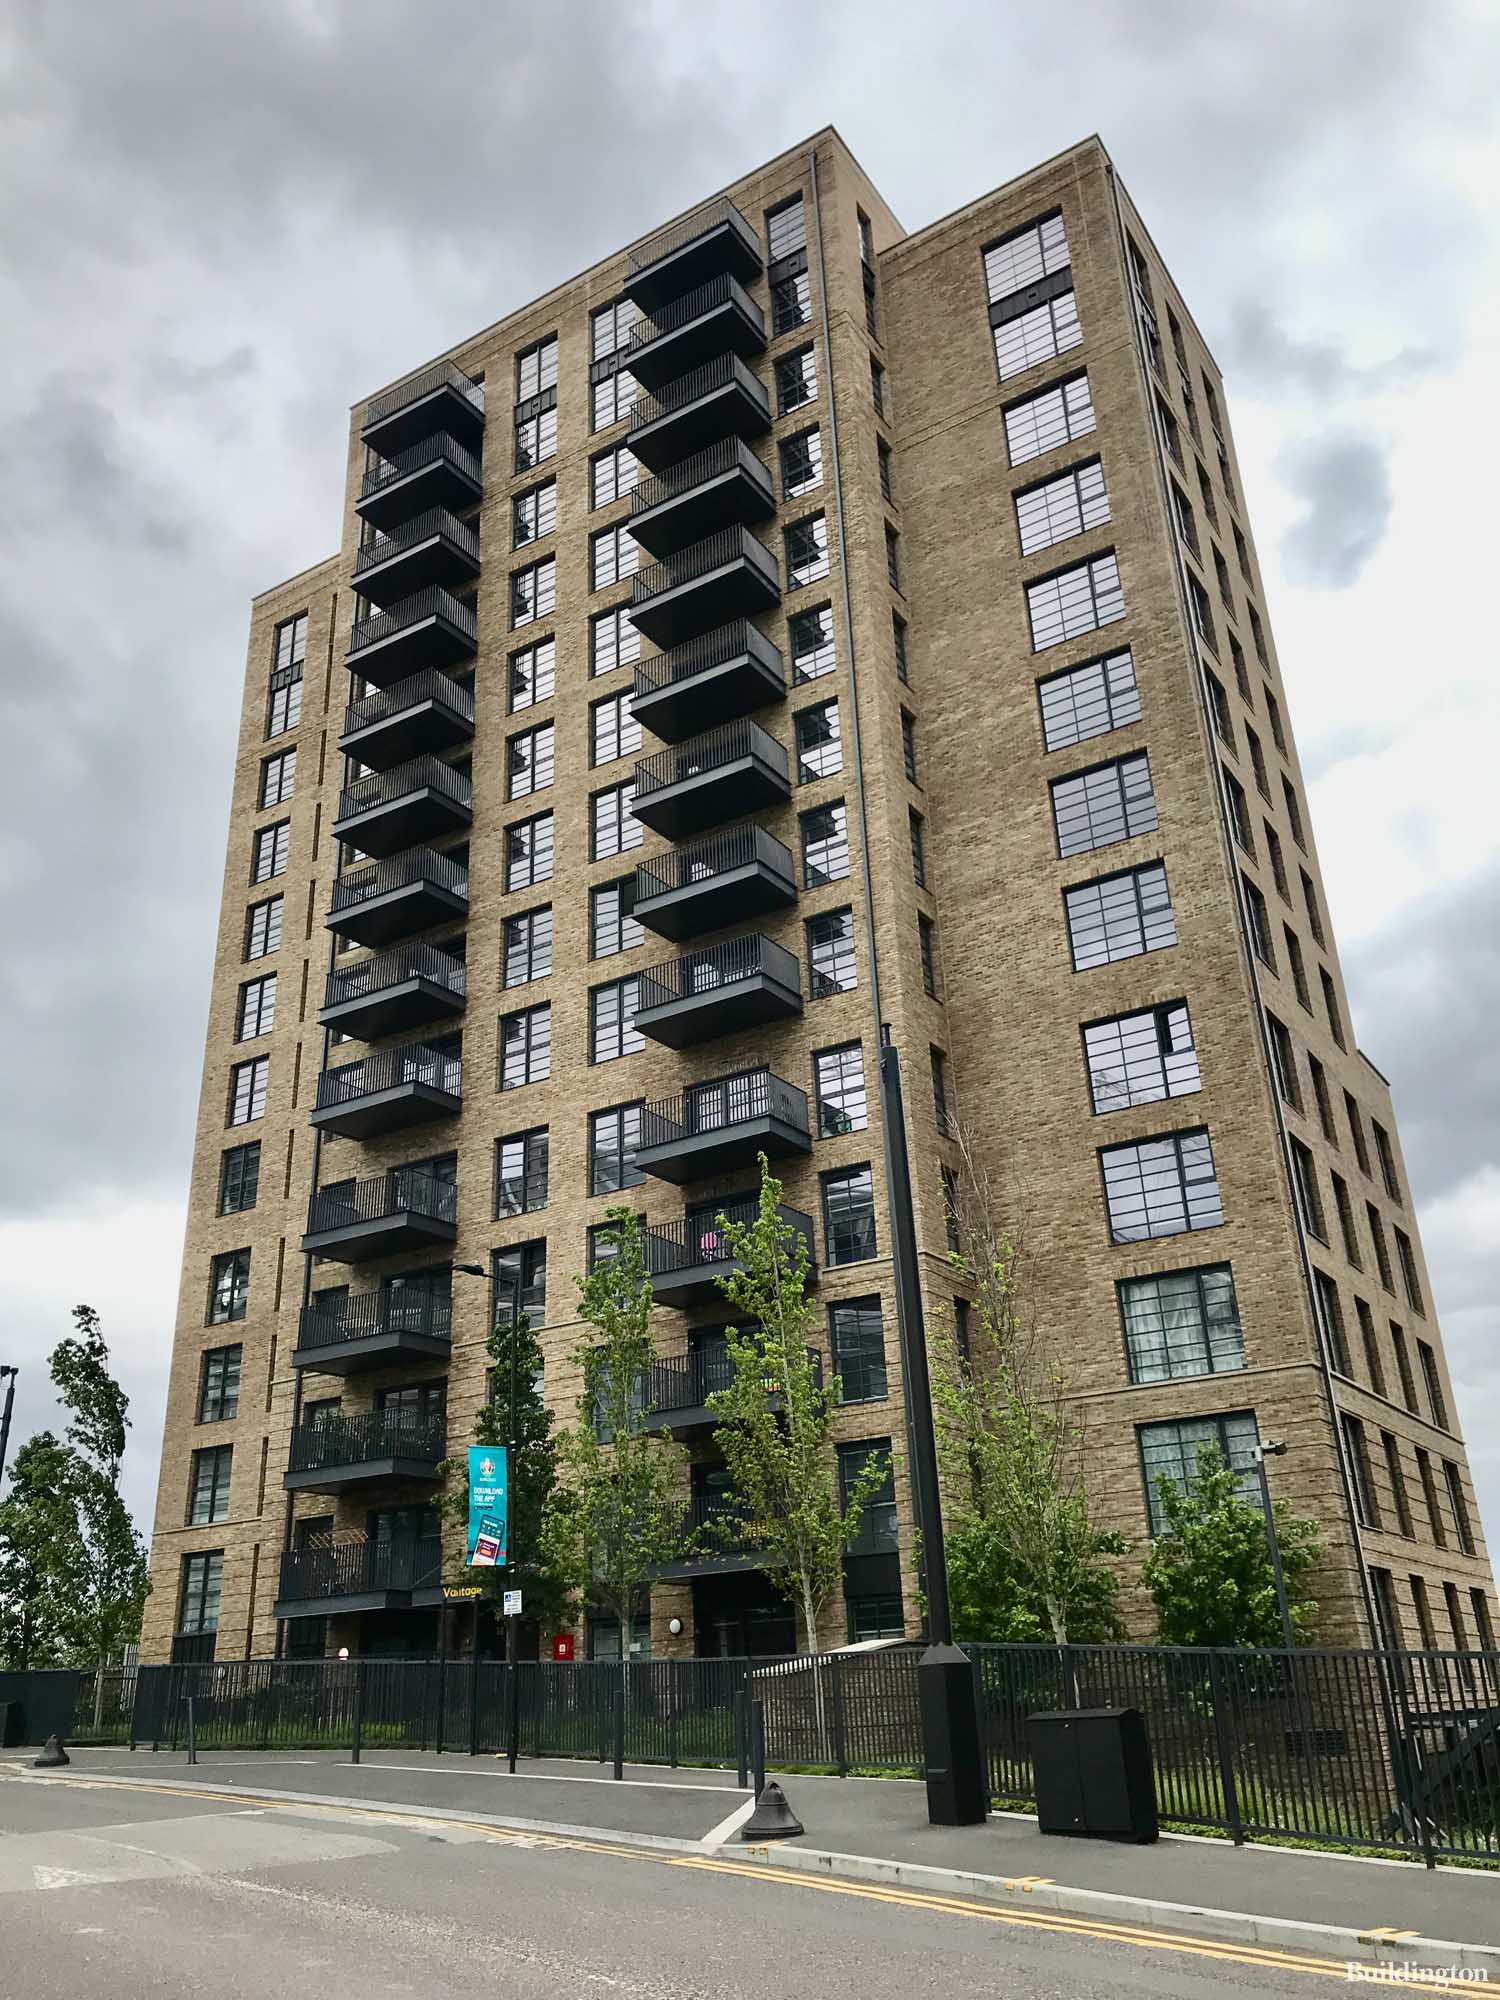 New build homes for rent at Vantage apartment building in Wembley HA9.